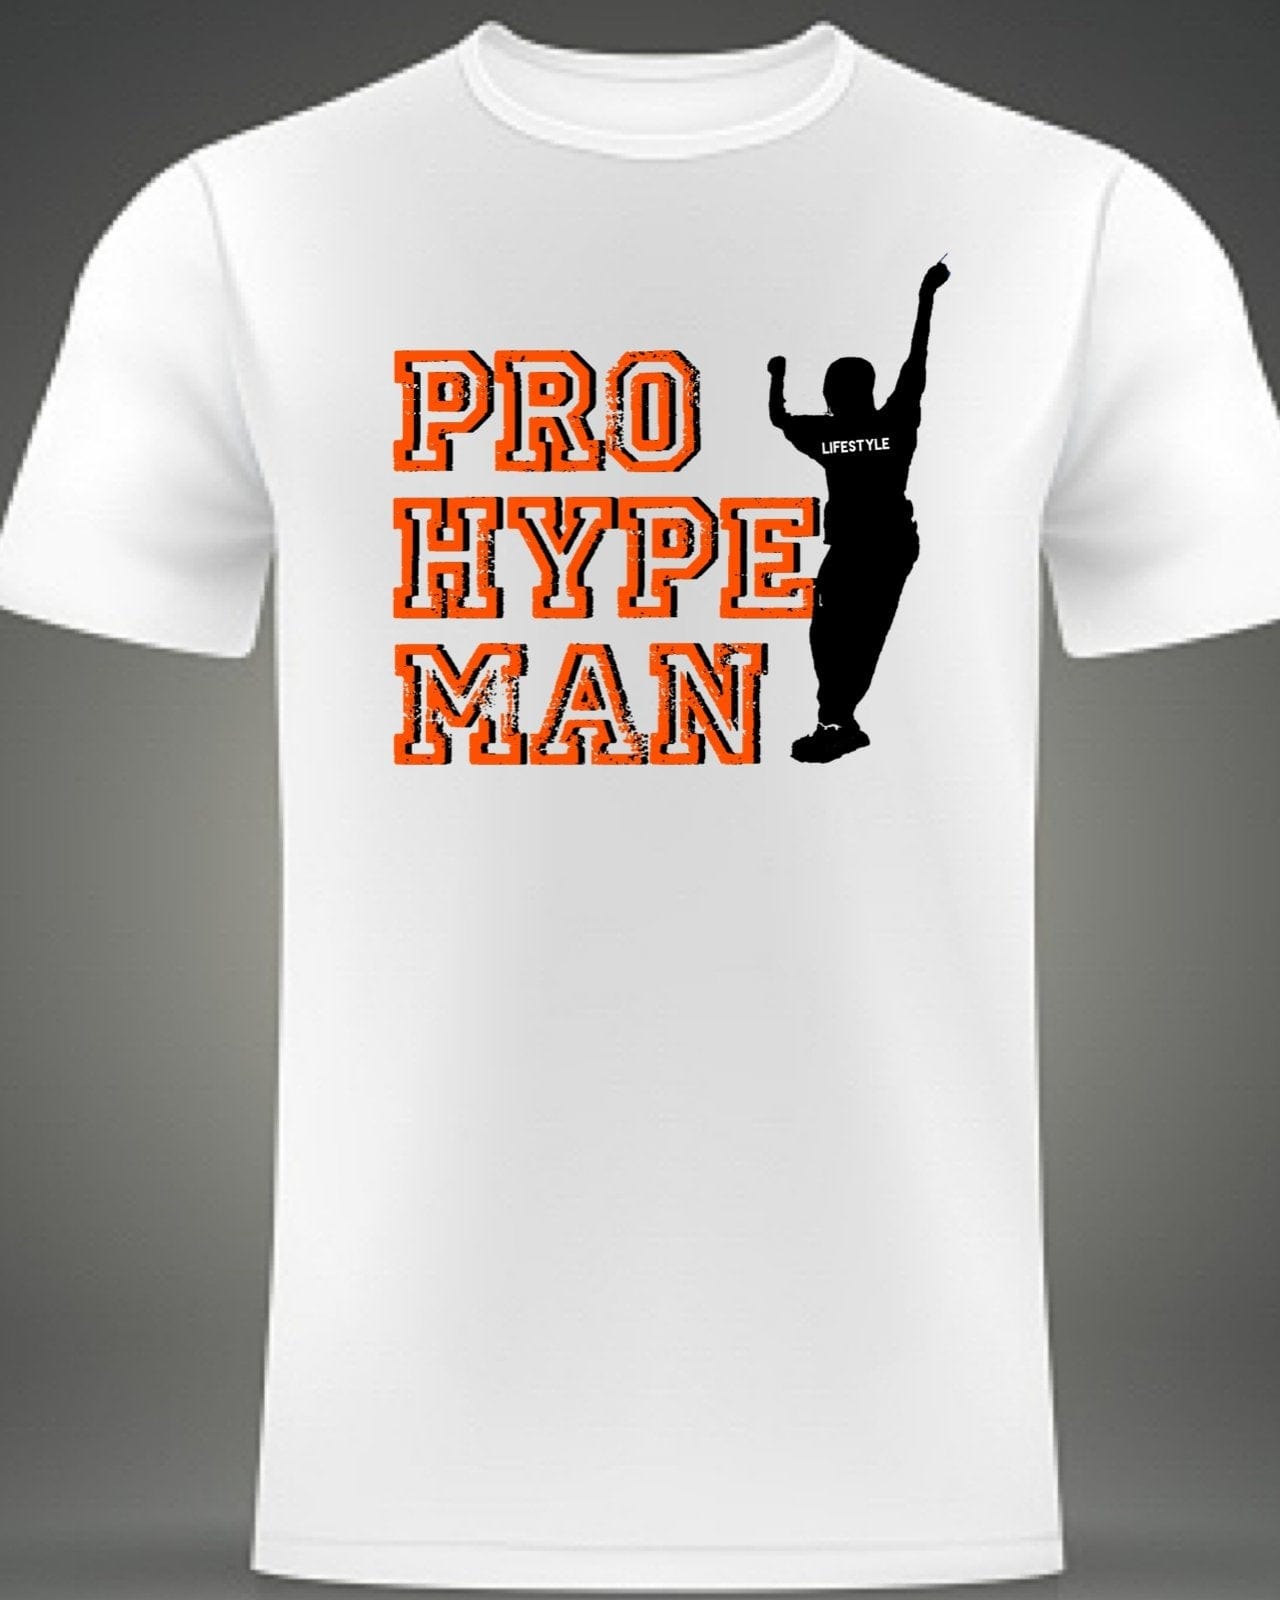 InsensitiviTees Shirts S / White Pro Hype Man T-shirt